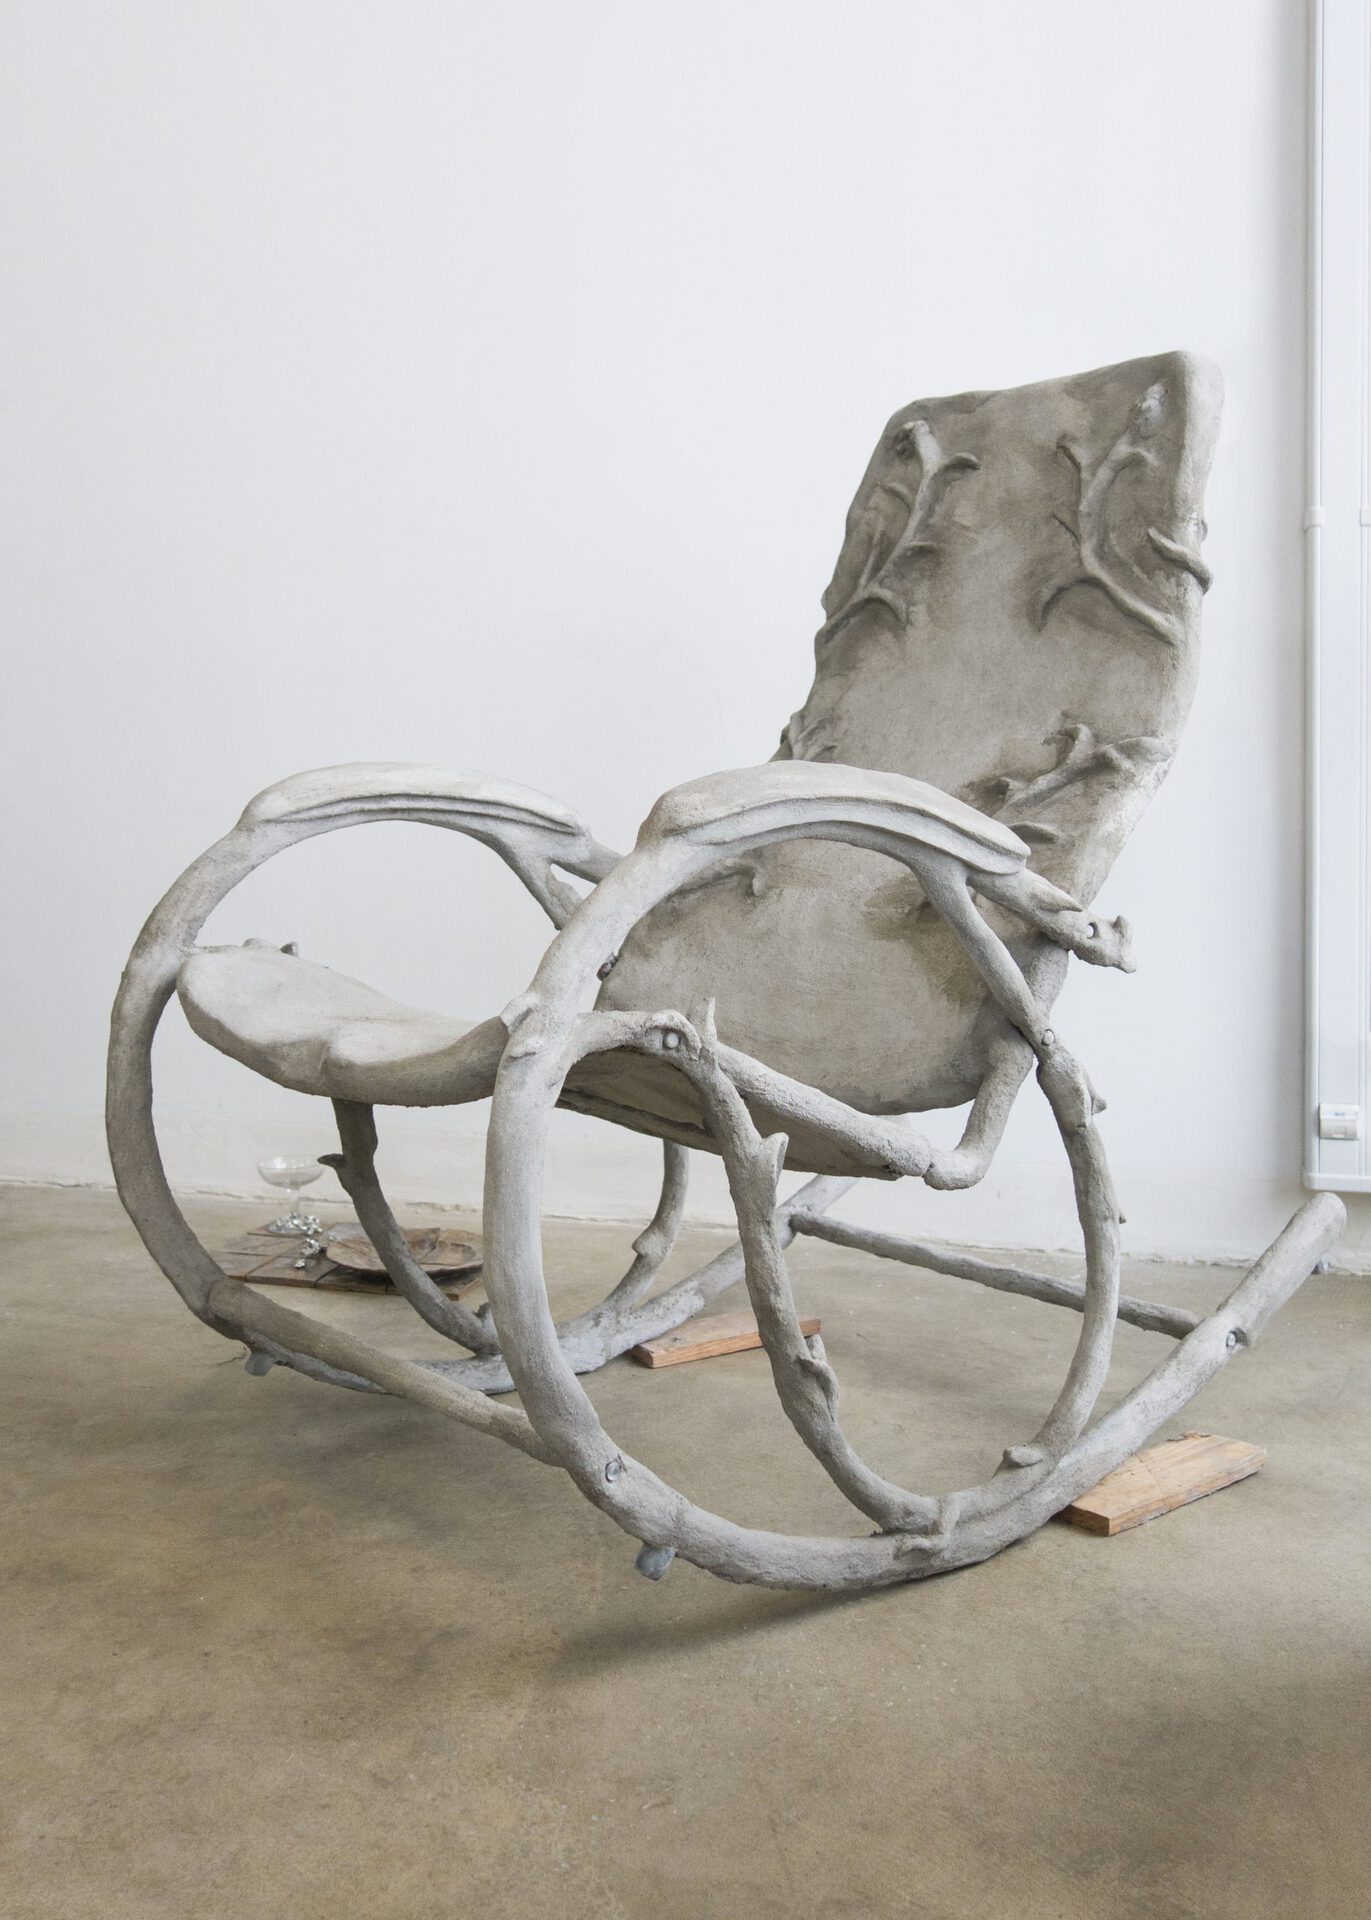 Valentin Vie Binet, The Rocking Chair that will Never Rock, 2020, Concrete, L66 x P100 x H 106 cm